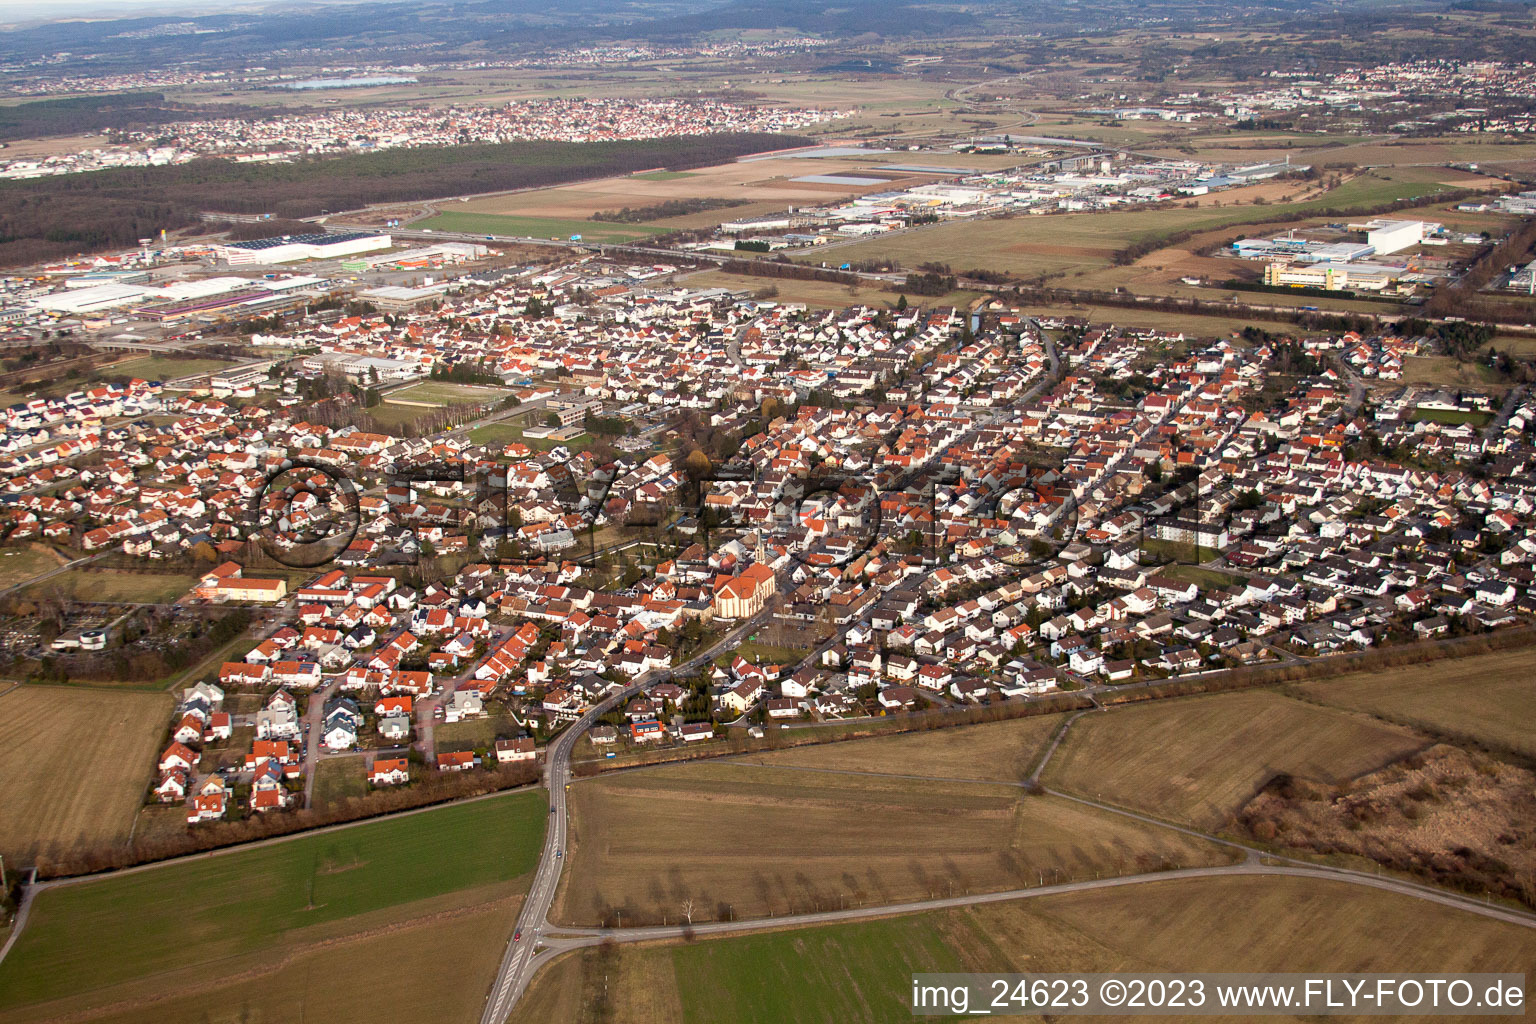 Quartier Karlsdorf in Karlsdorf-Neuthard dans le département Bade-Wurtemberg, Allemagne vue d'en haut